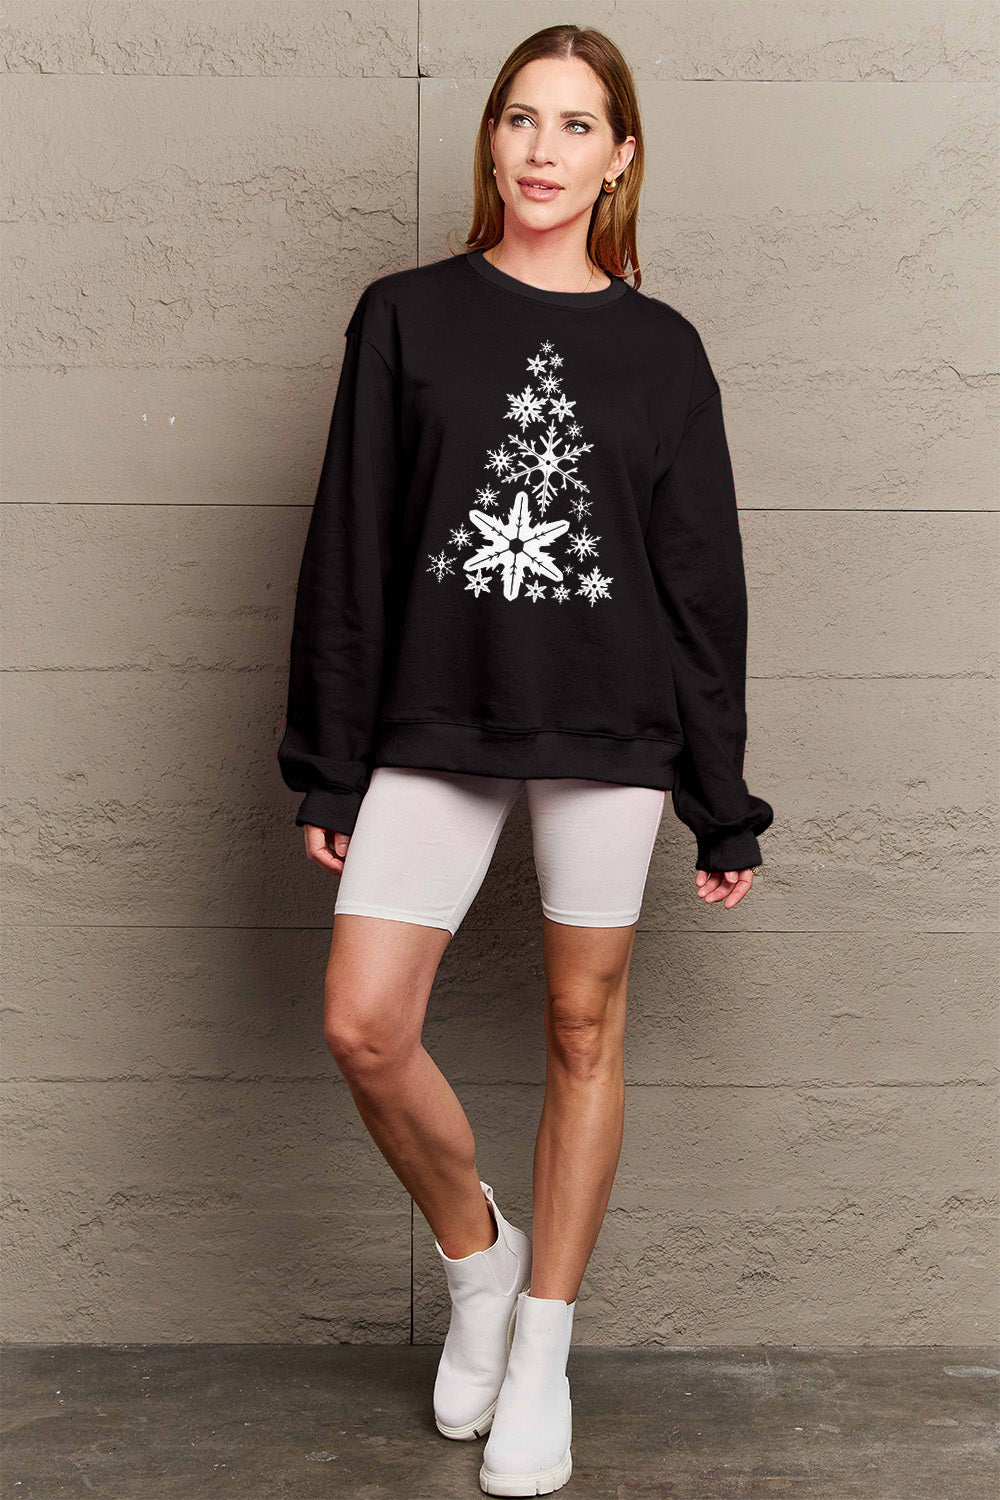 Snowflake Christmas Tree Graphic Sweatshirt - 3 Colors